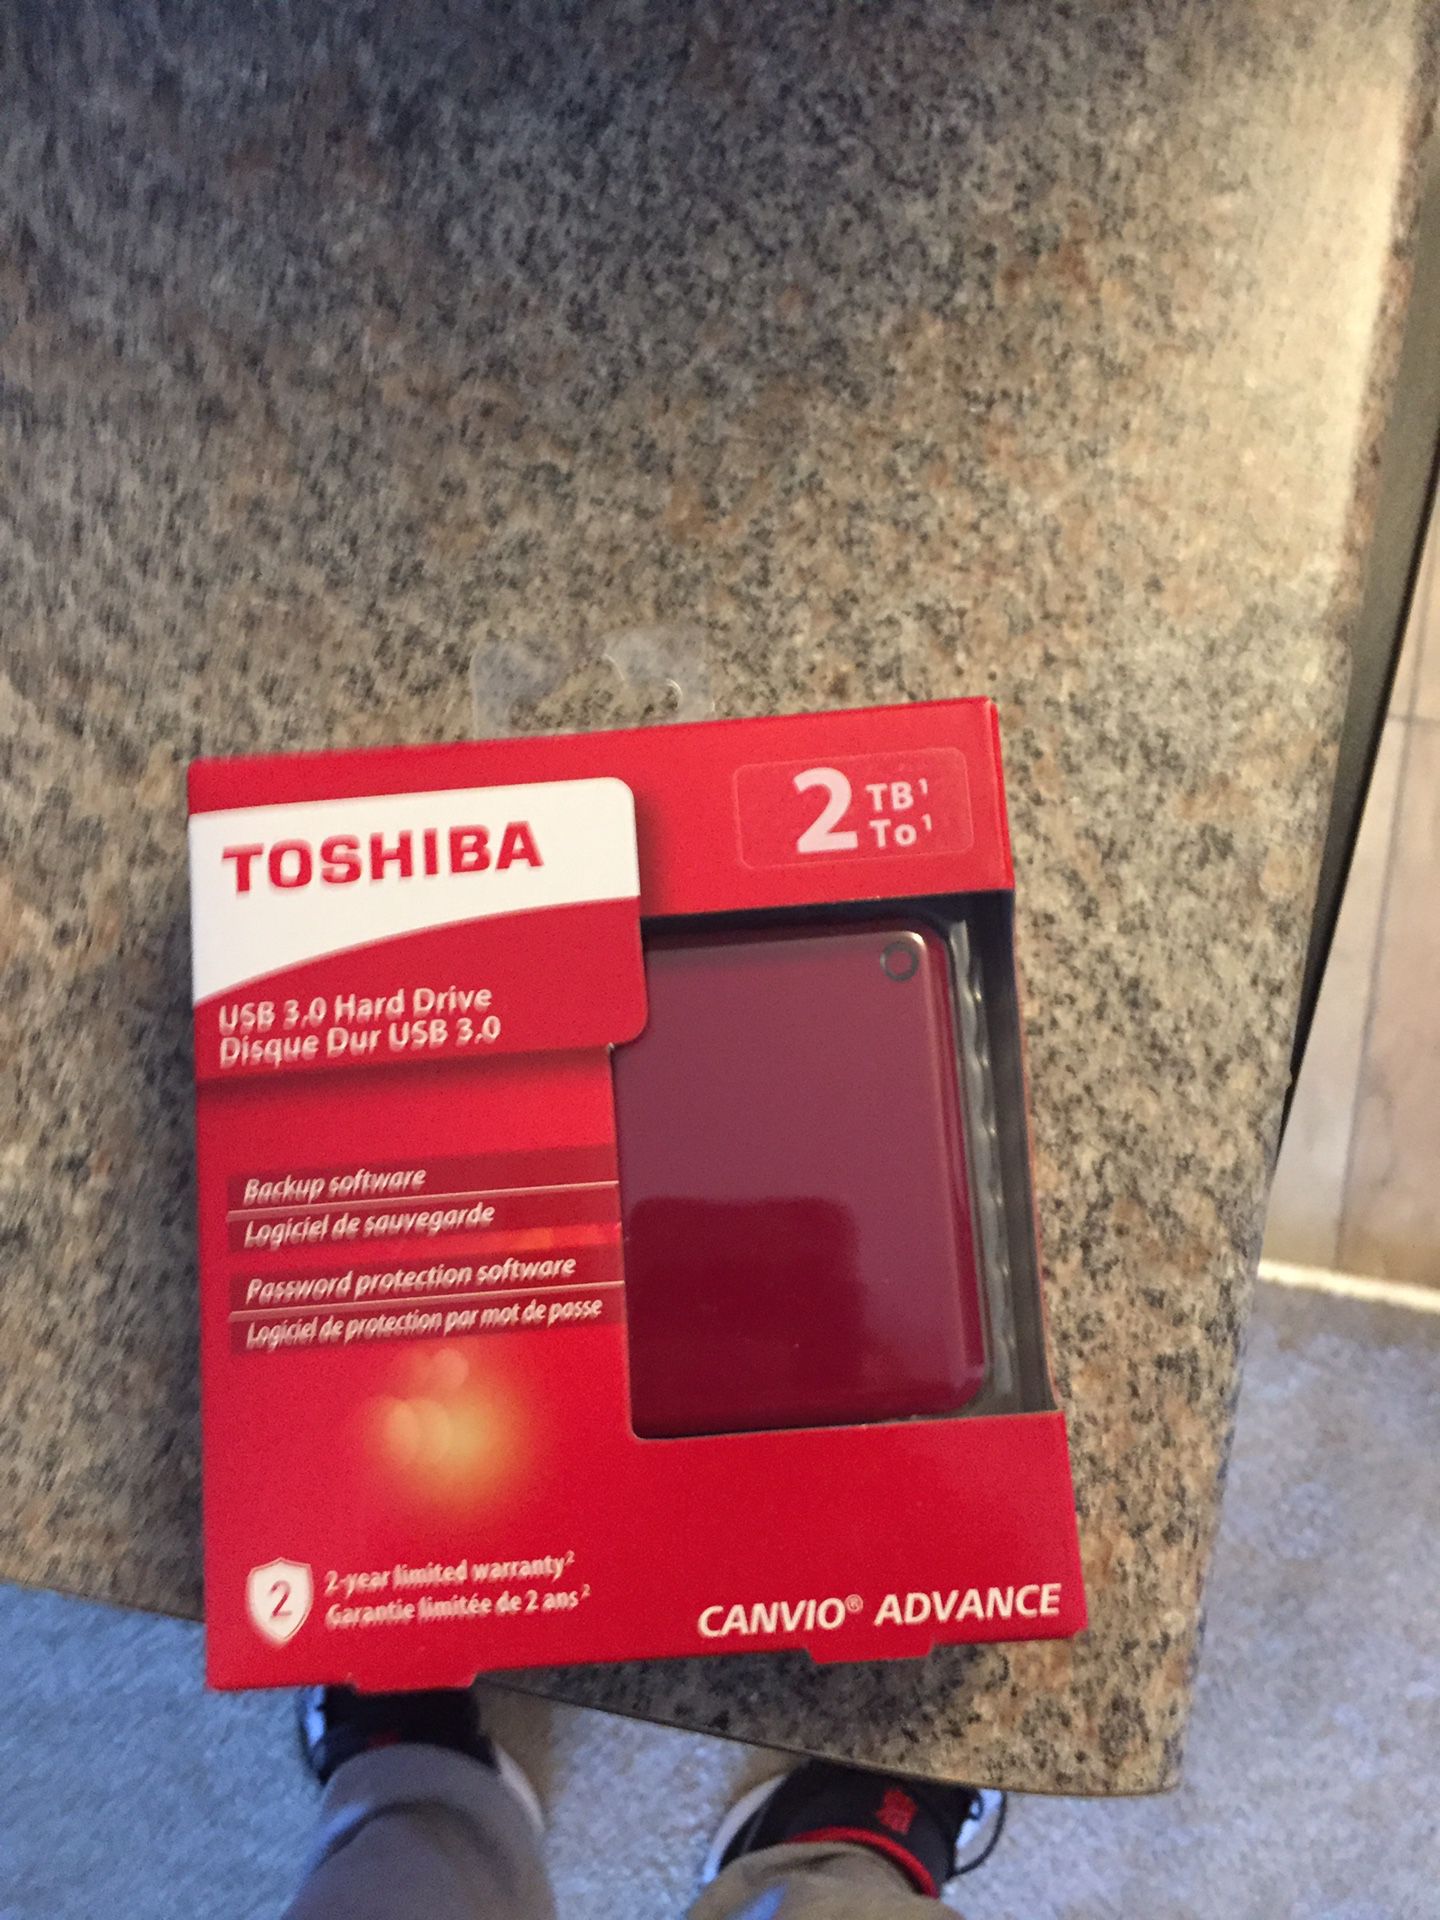 Toshiba 2 TB External Hard drive